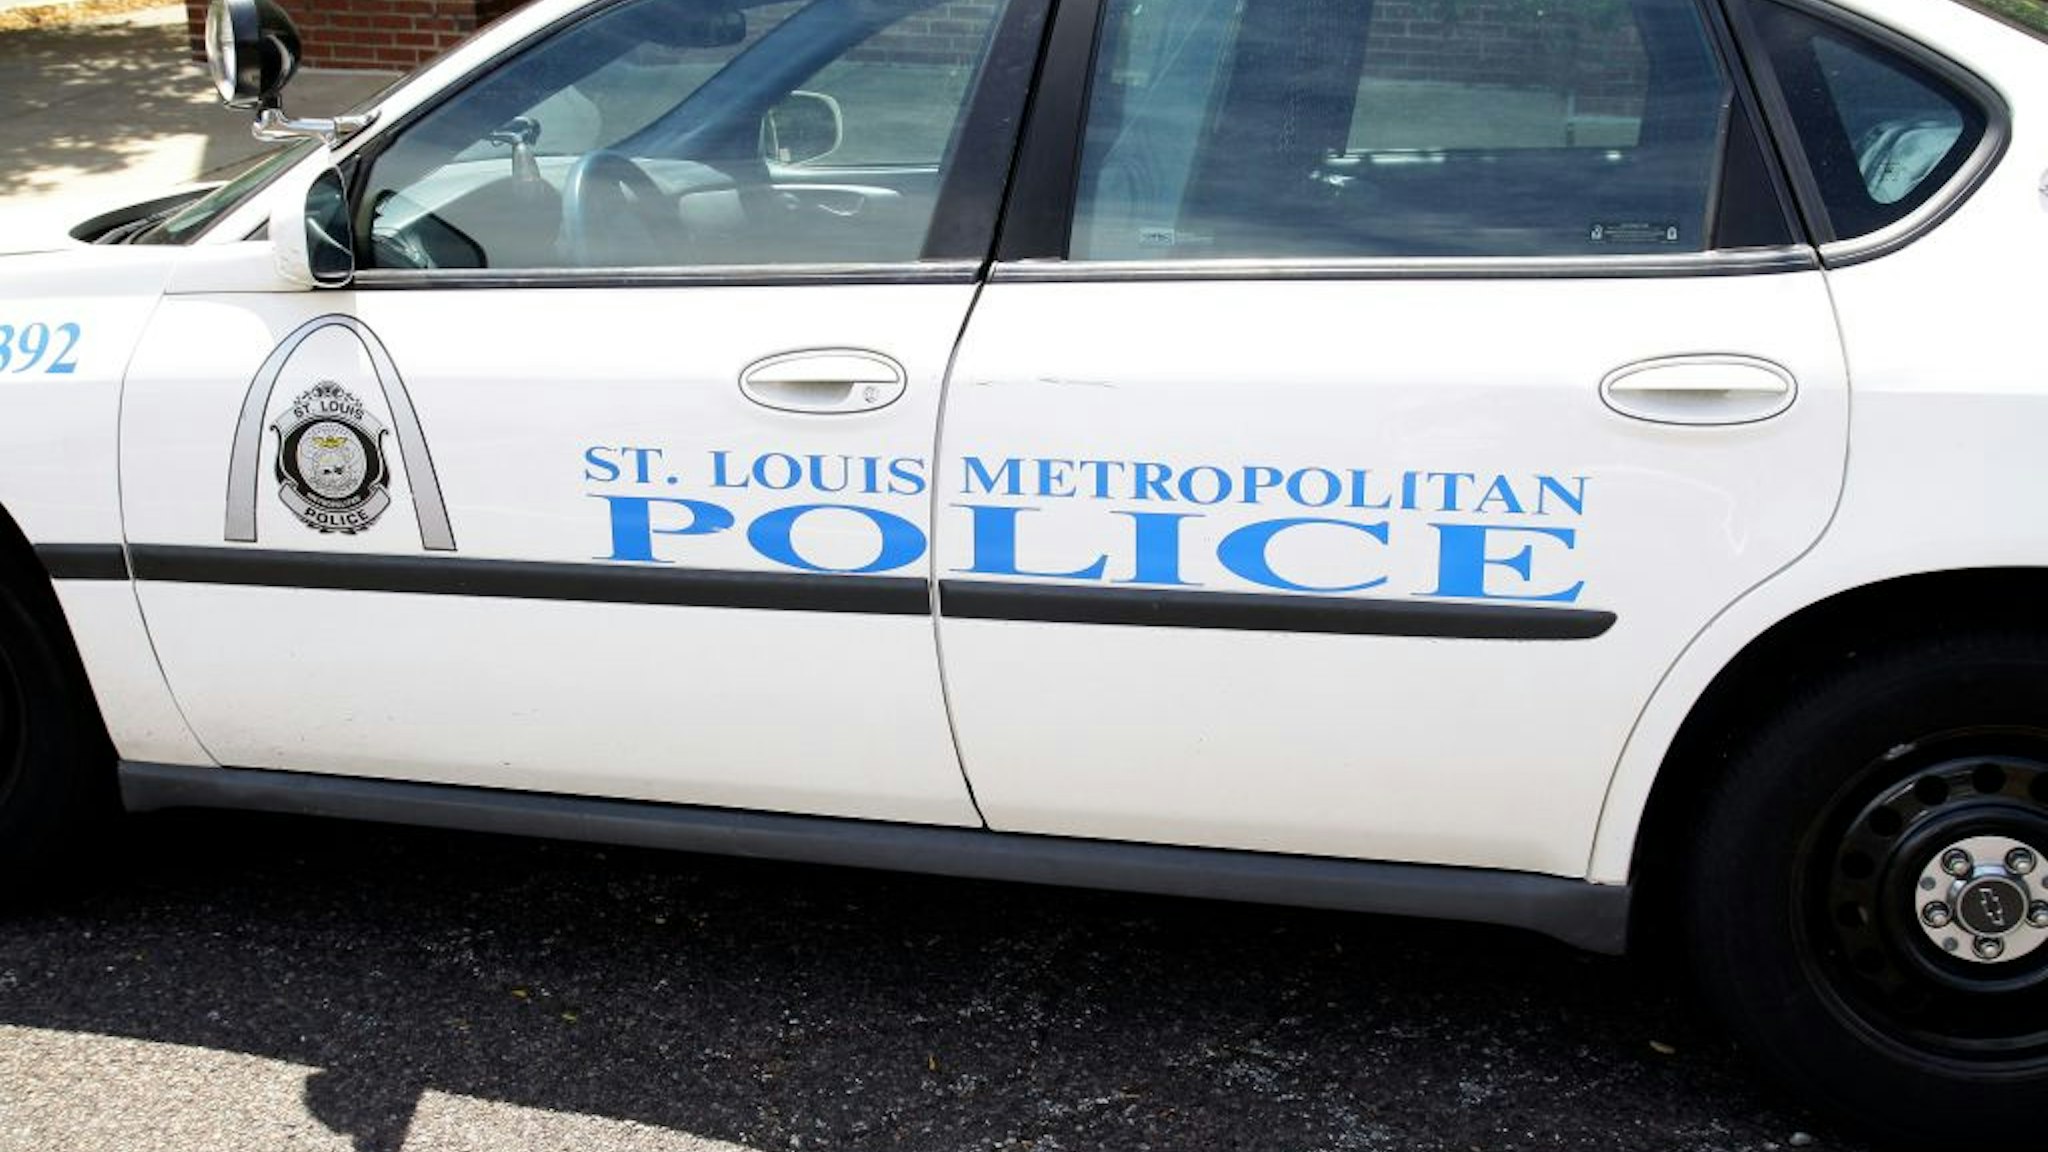 St. Louis Metropolitan Police Car, in St. Louis, Missouri on AUGUST 05, 2012.